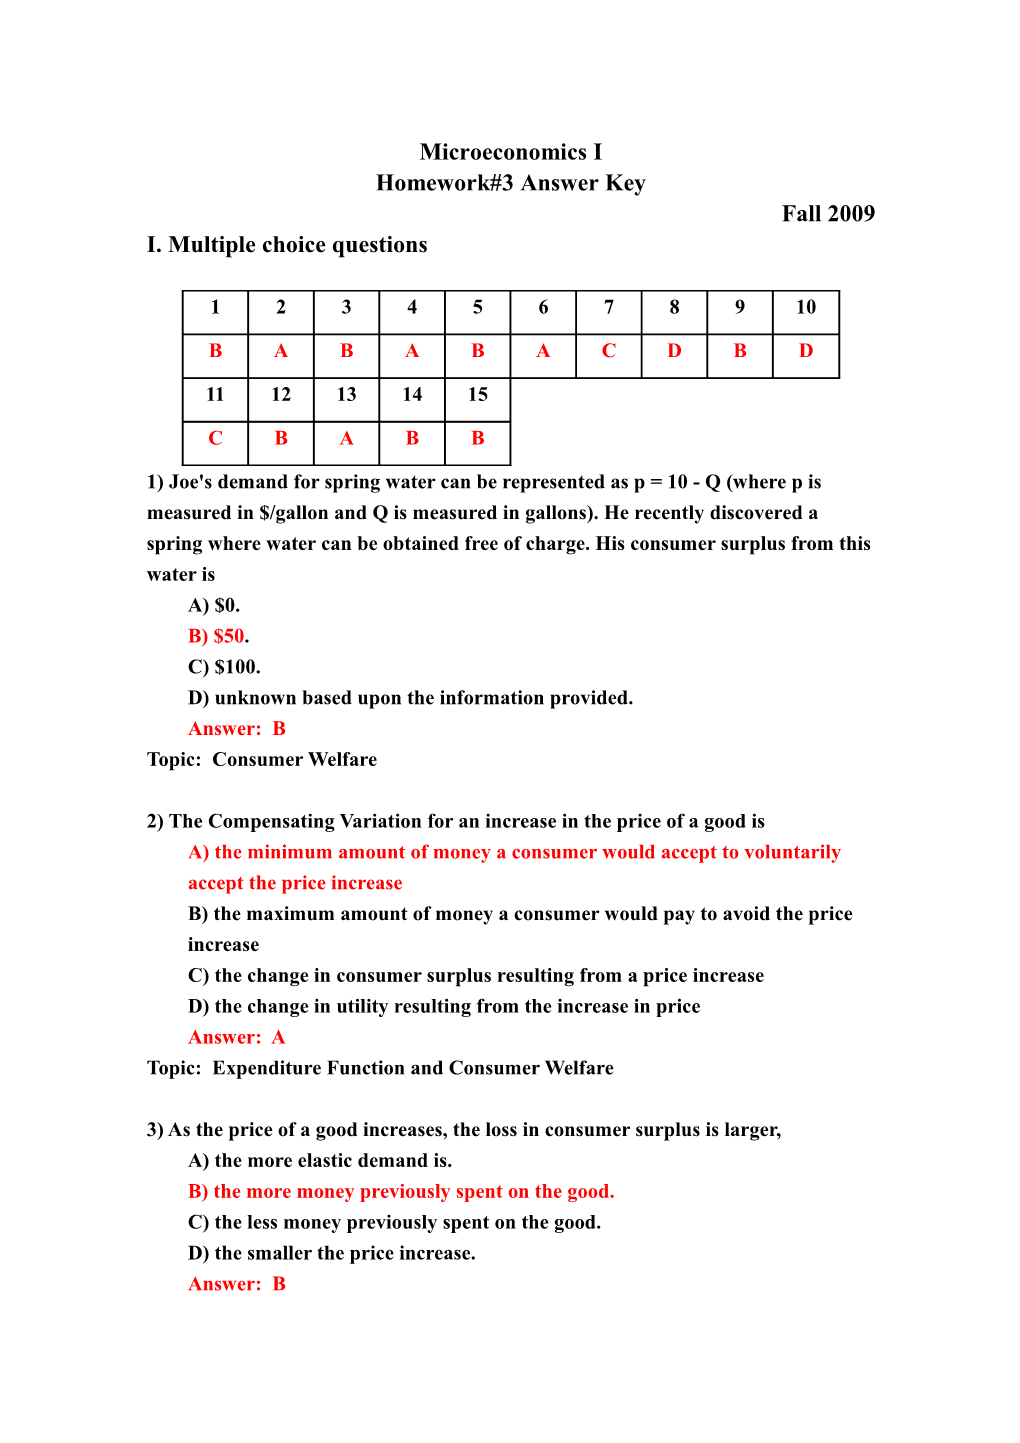 Homework#3 Answer Key